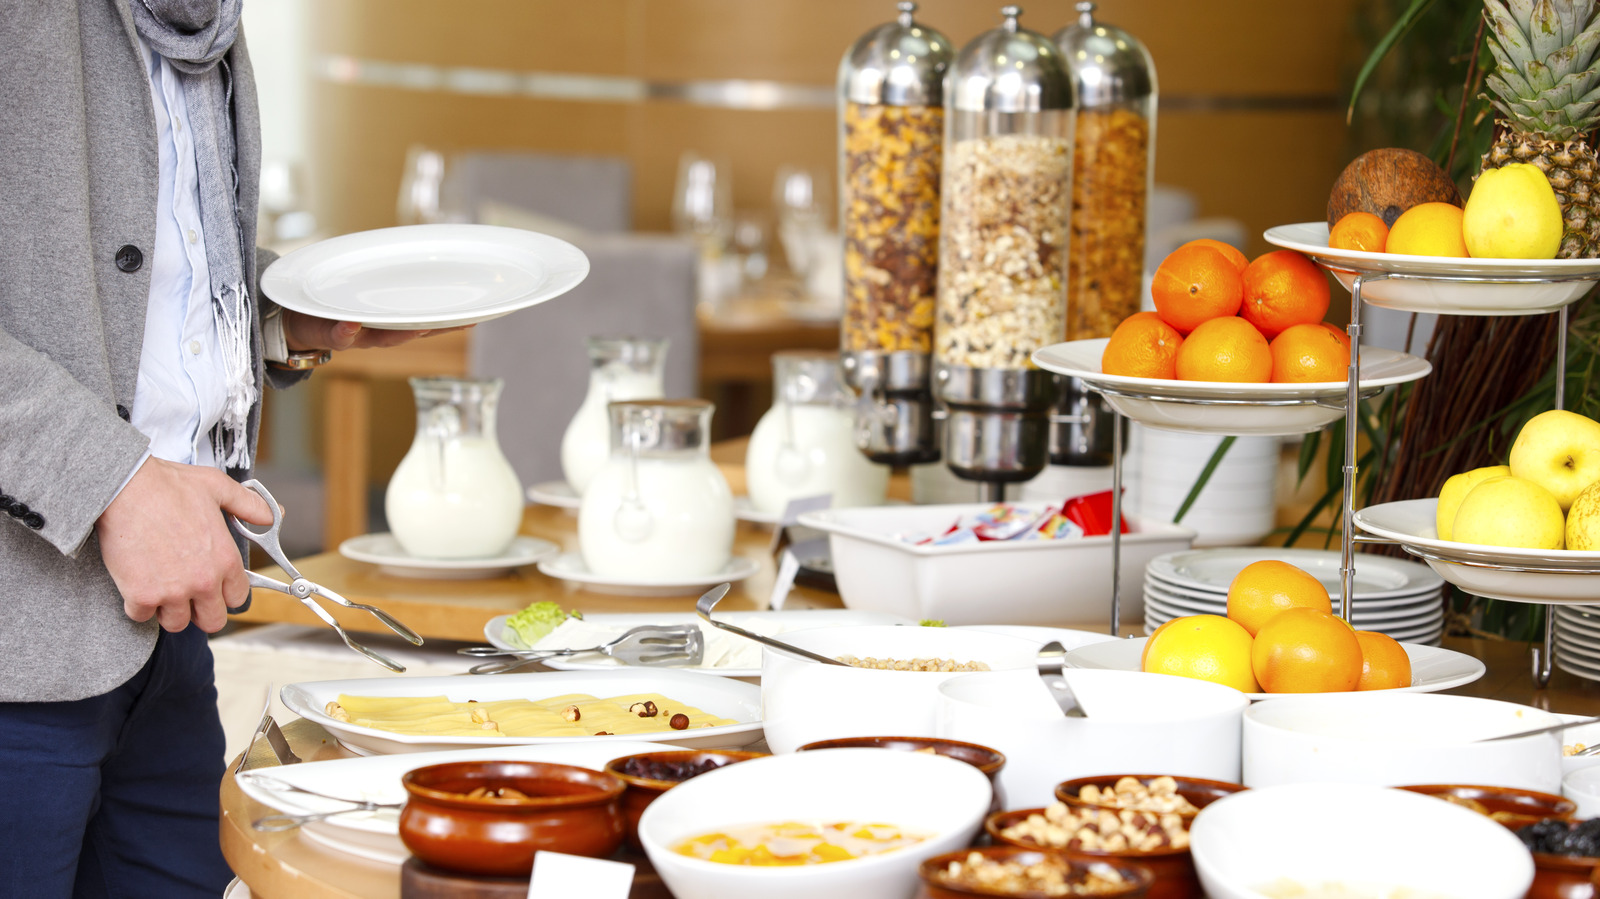 18 Best And Worst Hotel Breakfast Buffet Foods